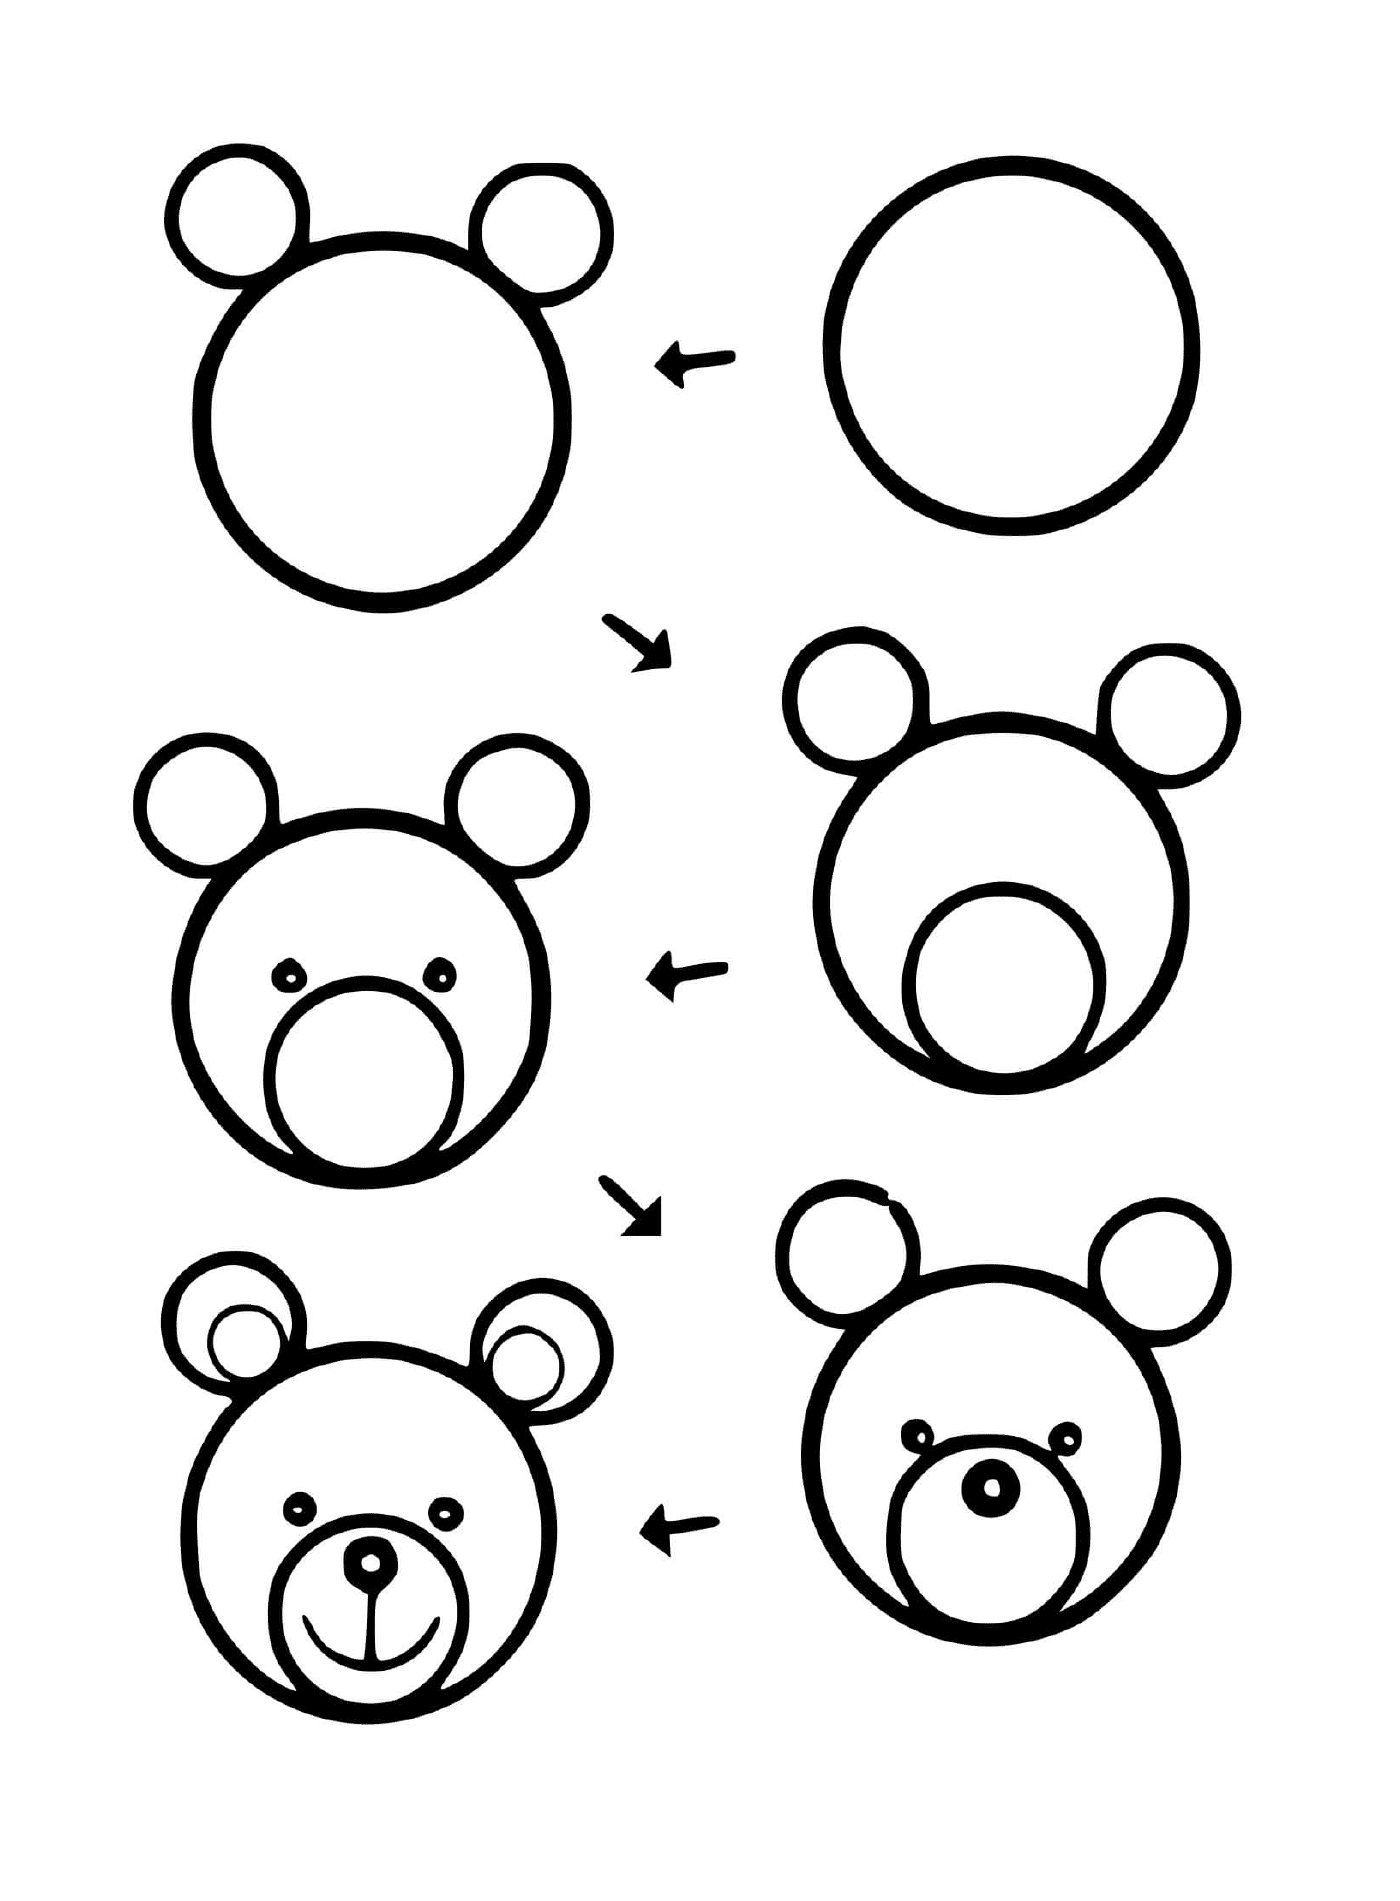  An easy to draw teddy bear 